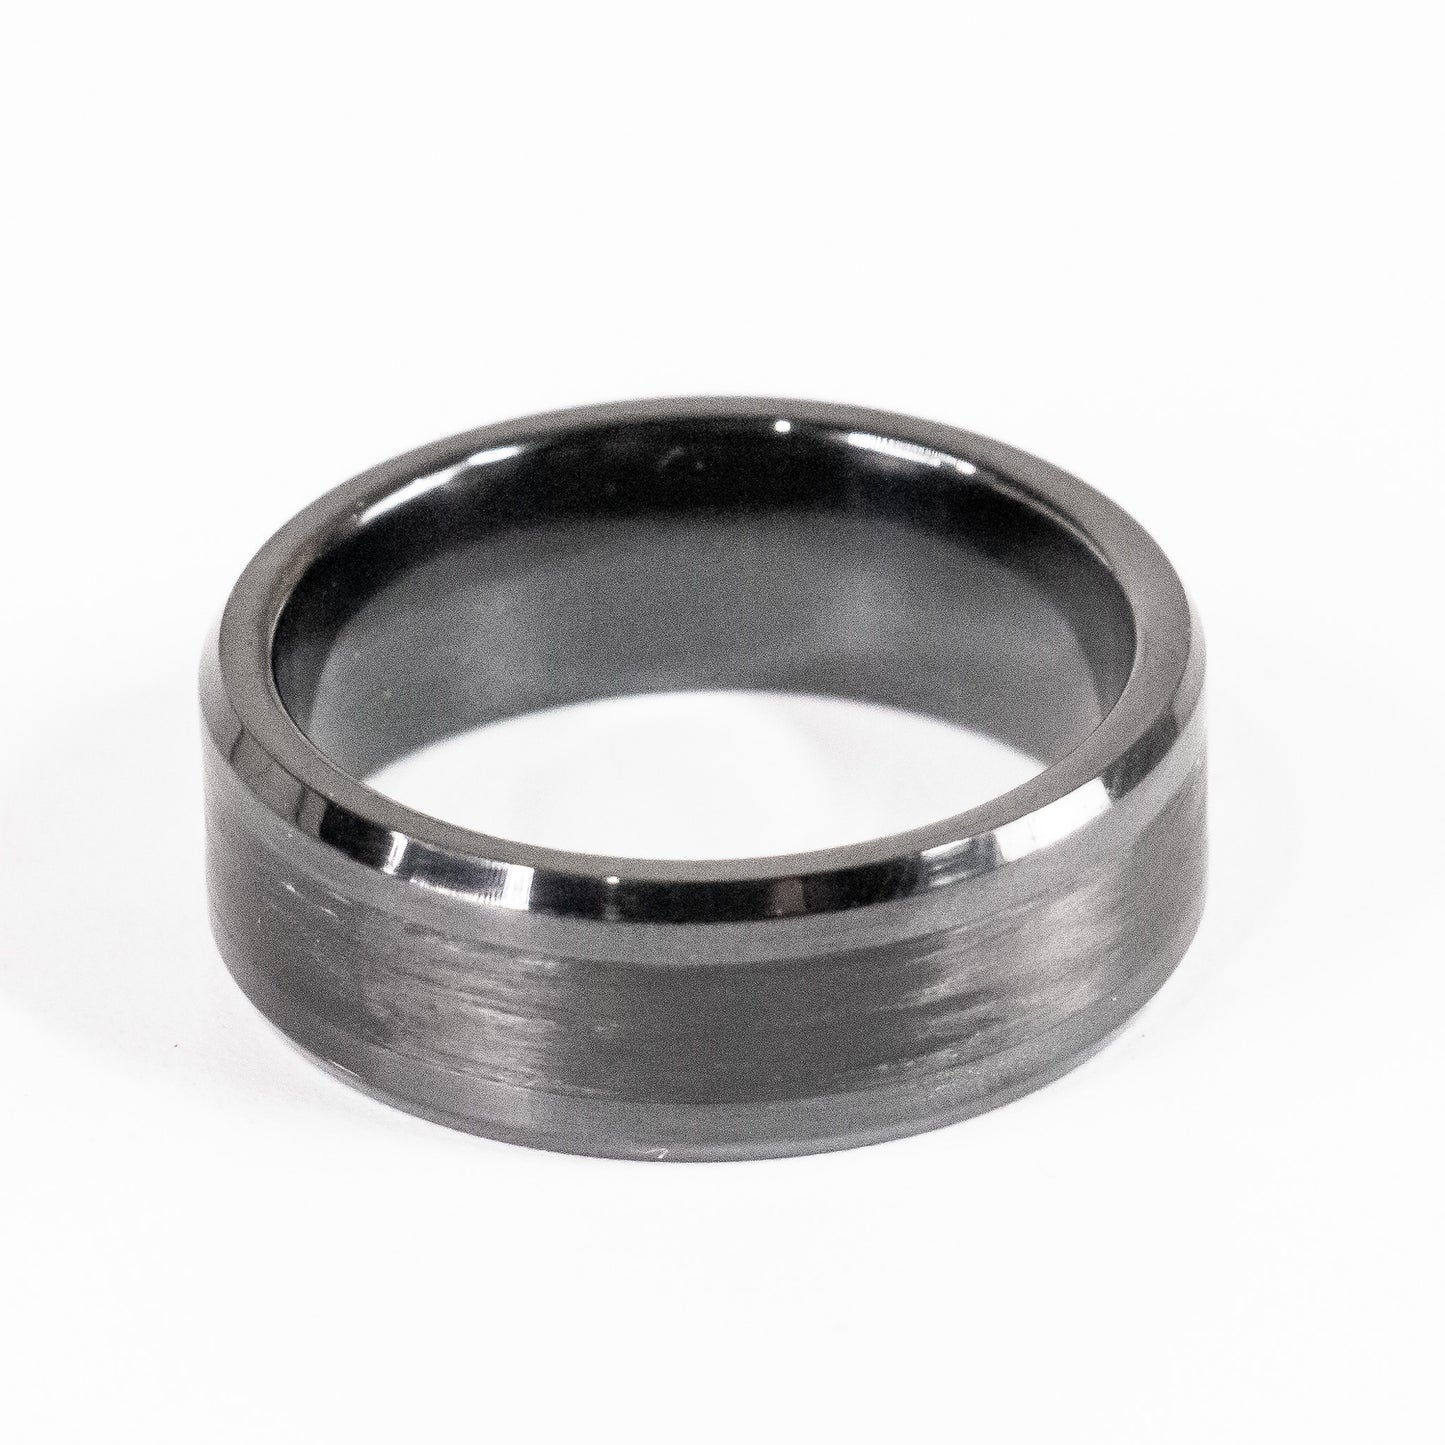 The Stealth Hand Set Carbon Fiber Ring In Black Ceramic